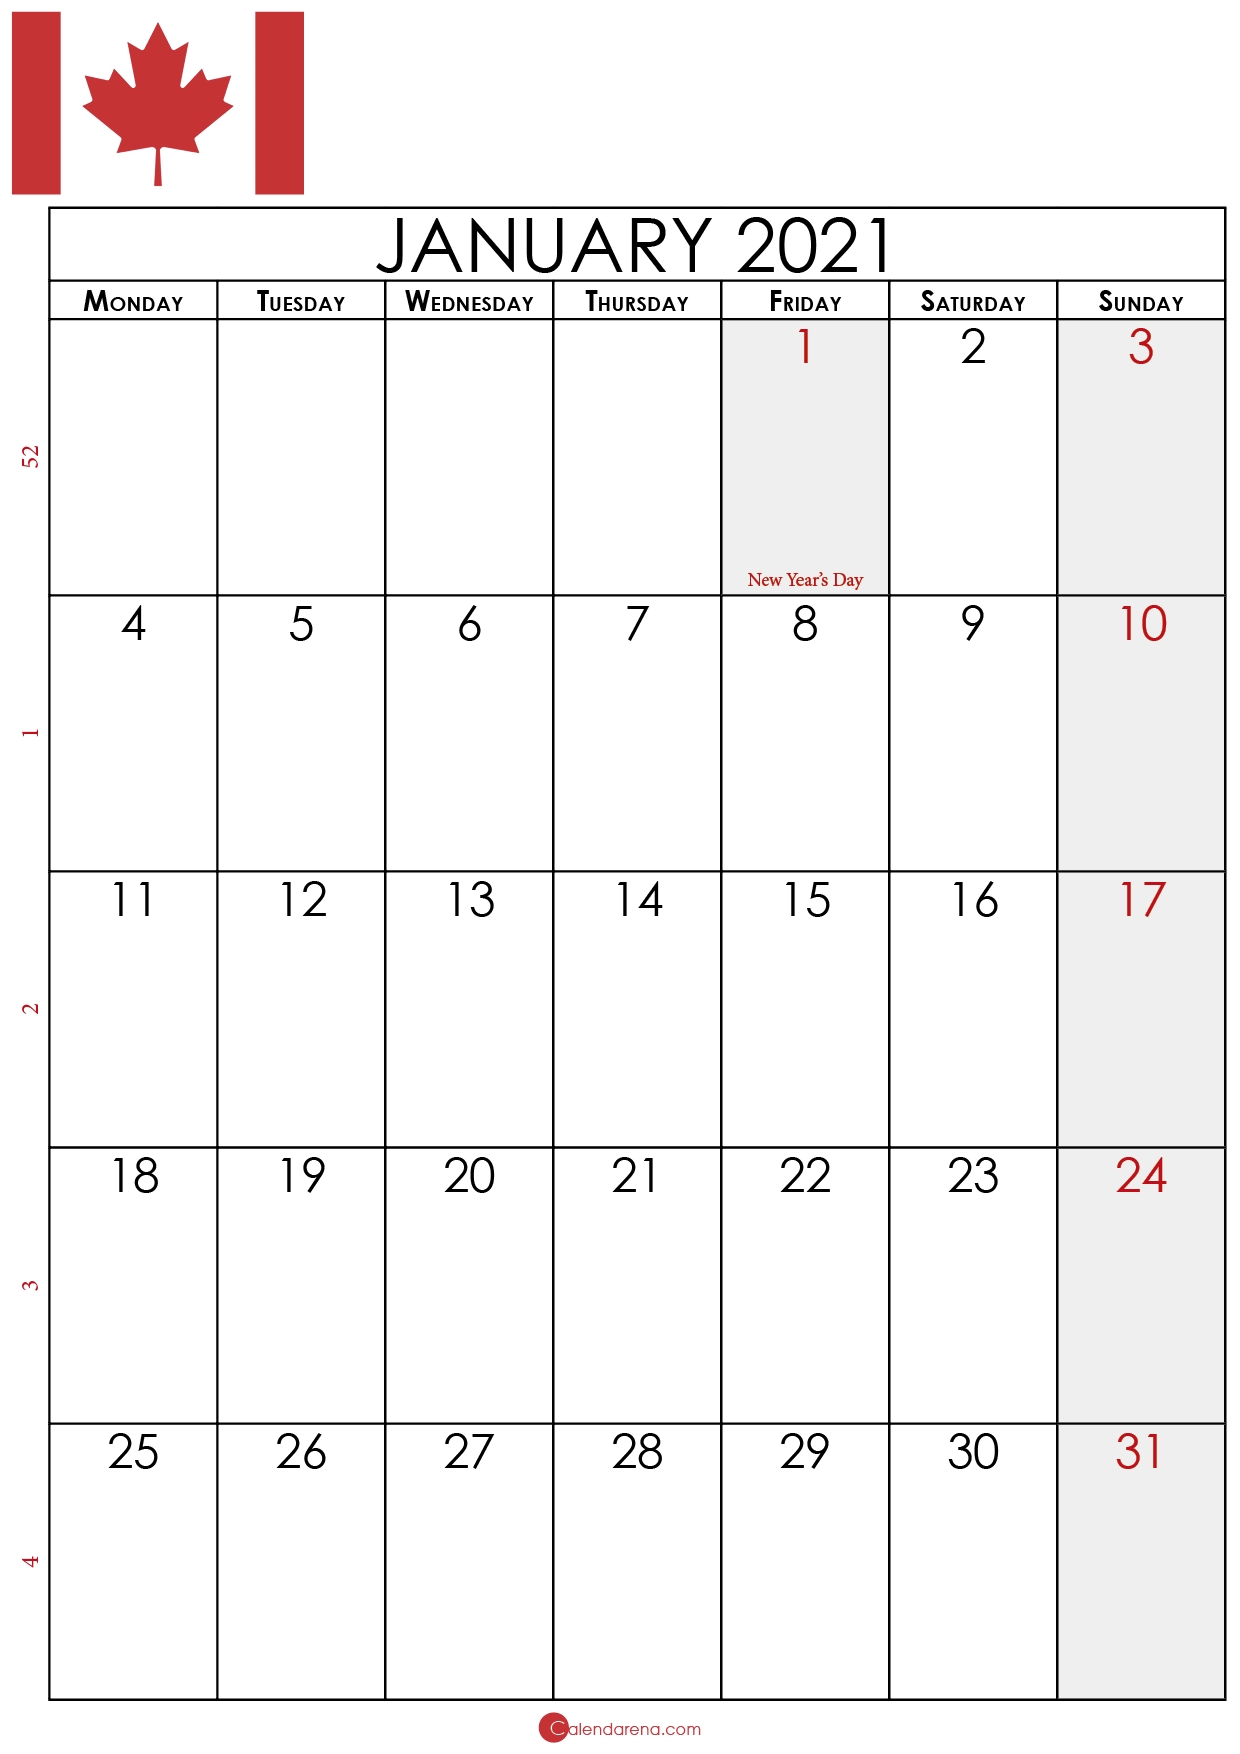 Download Free January 2021 Calendar Canada???? With Weeks - Calendarena October 2021 Calendar With Holidays Canada